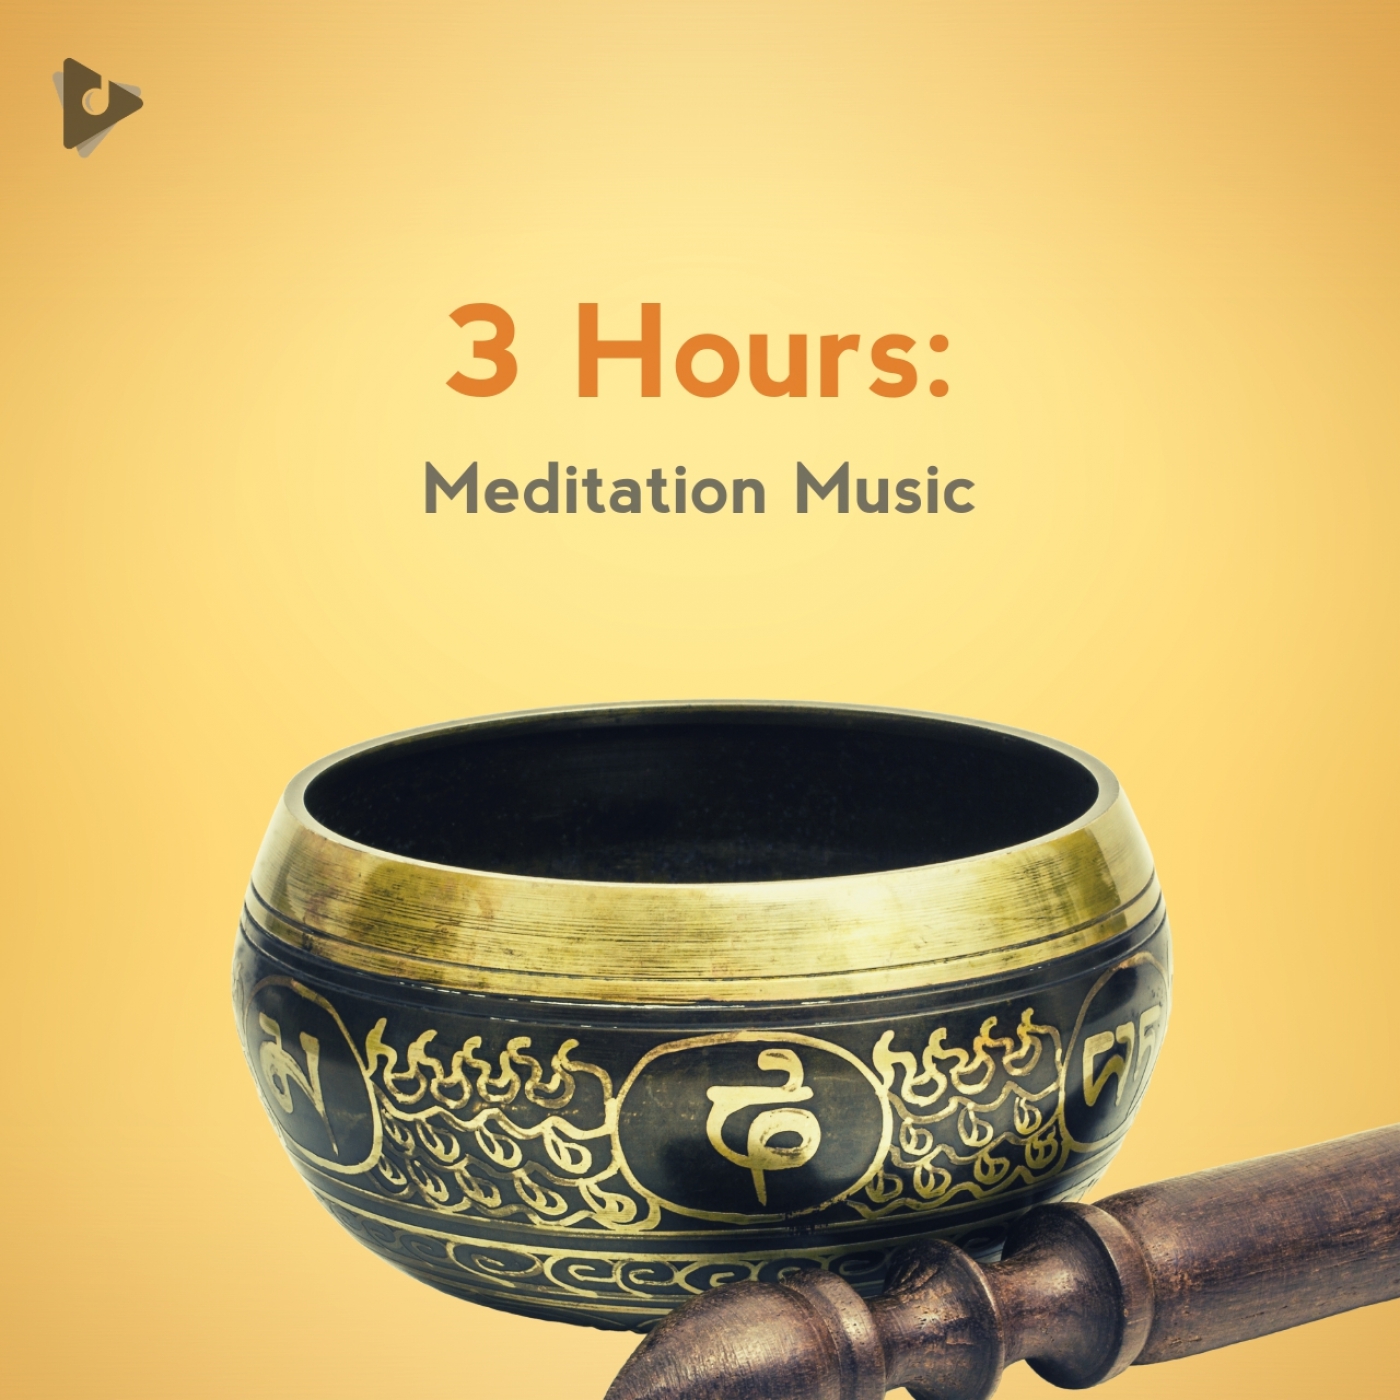 3 Hours: Meditation Music